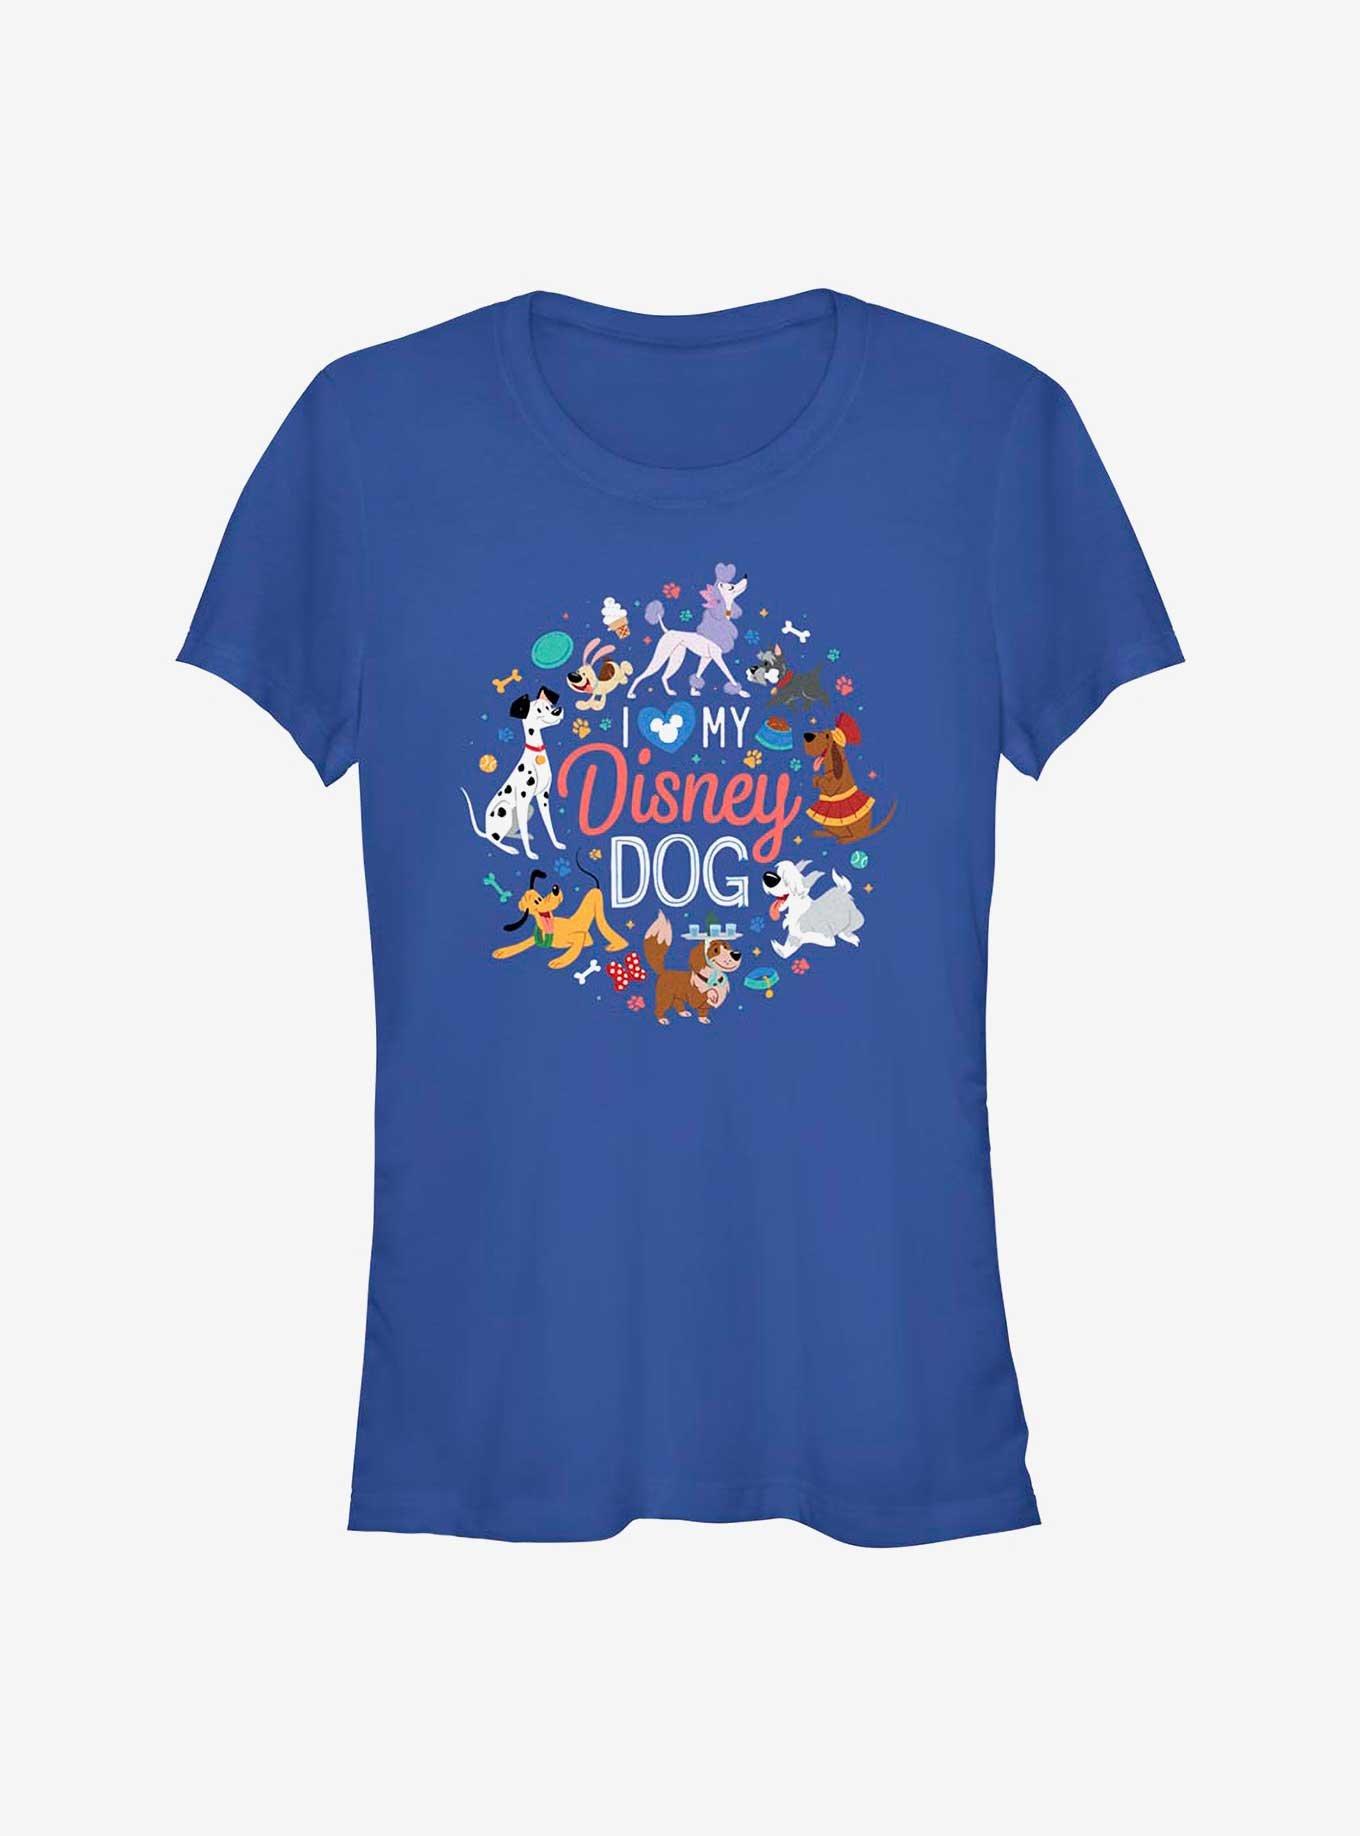 Disney Channel I Love Dogs Girls T-Shirt